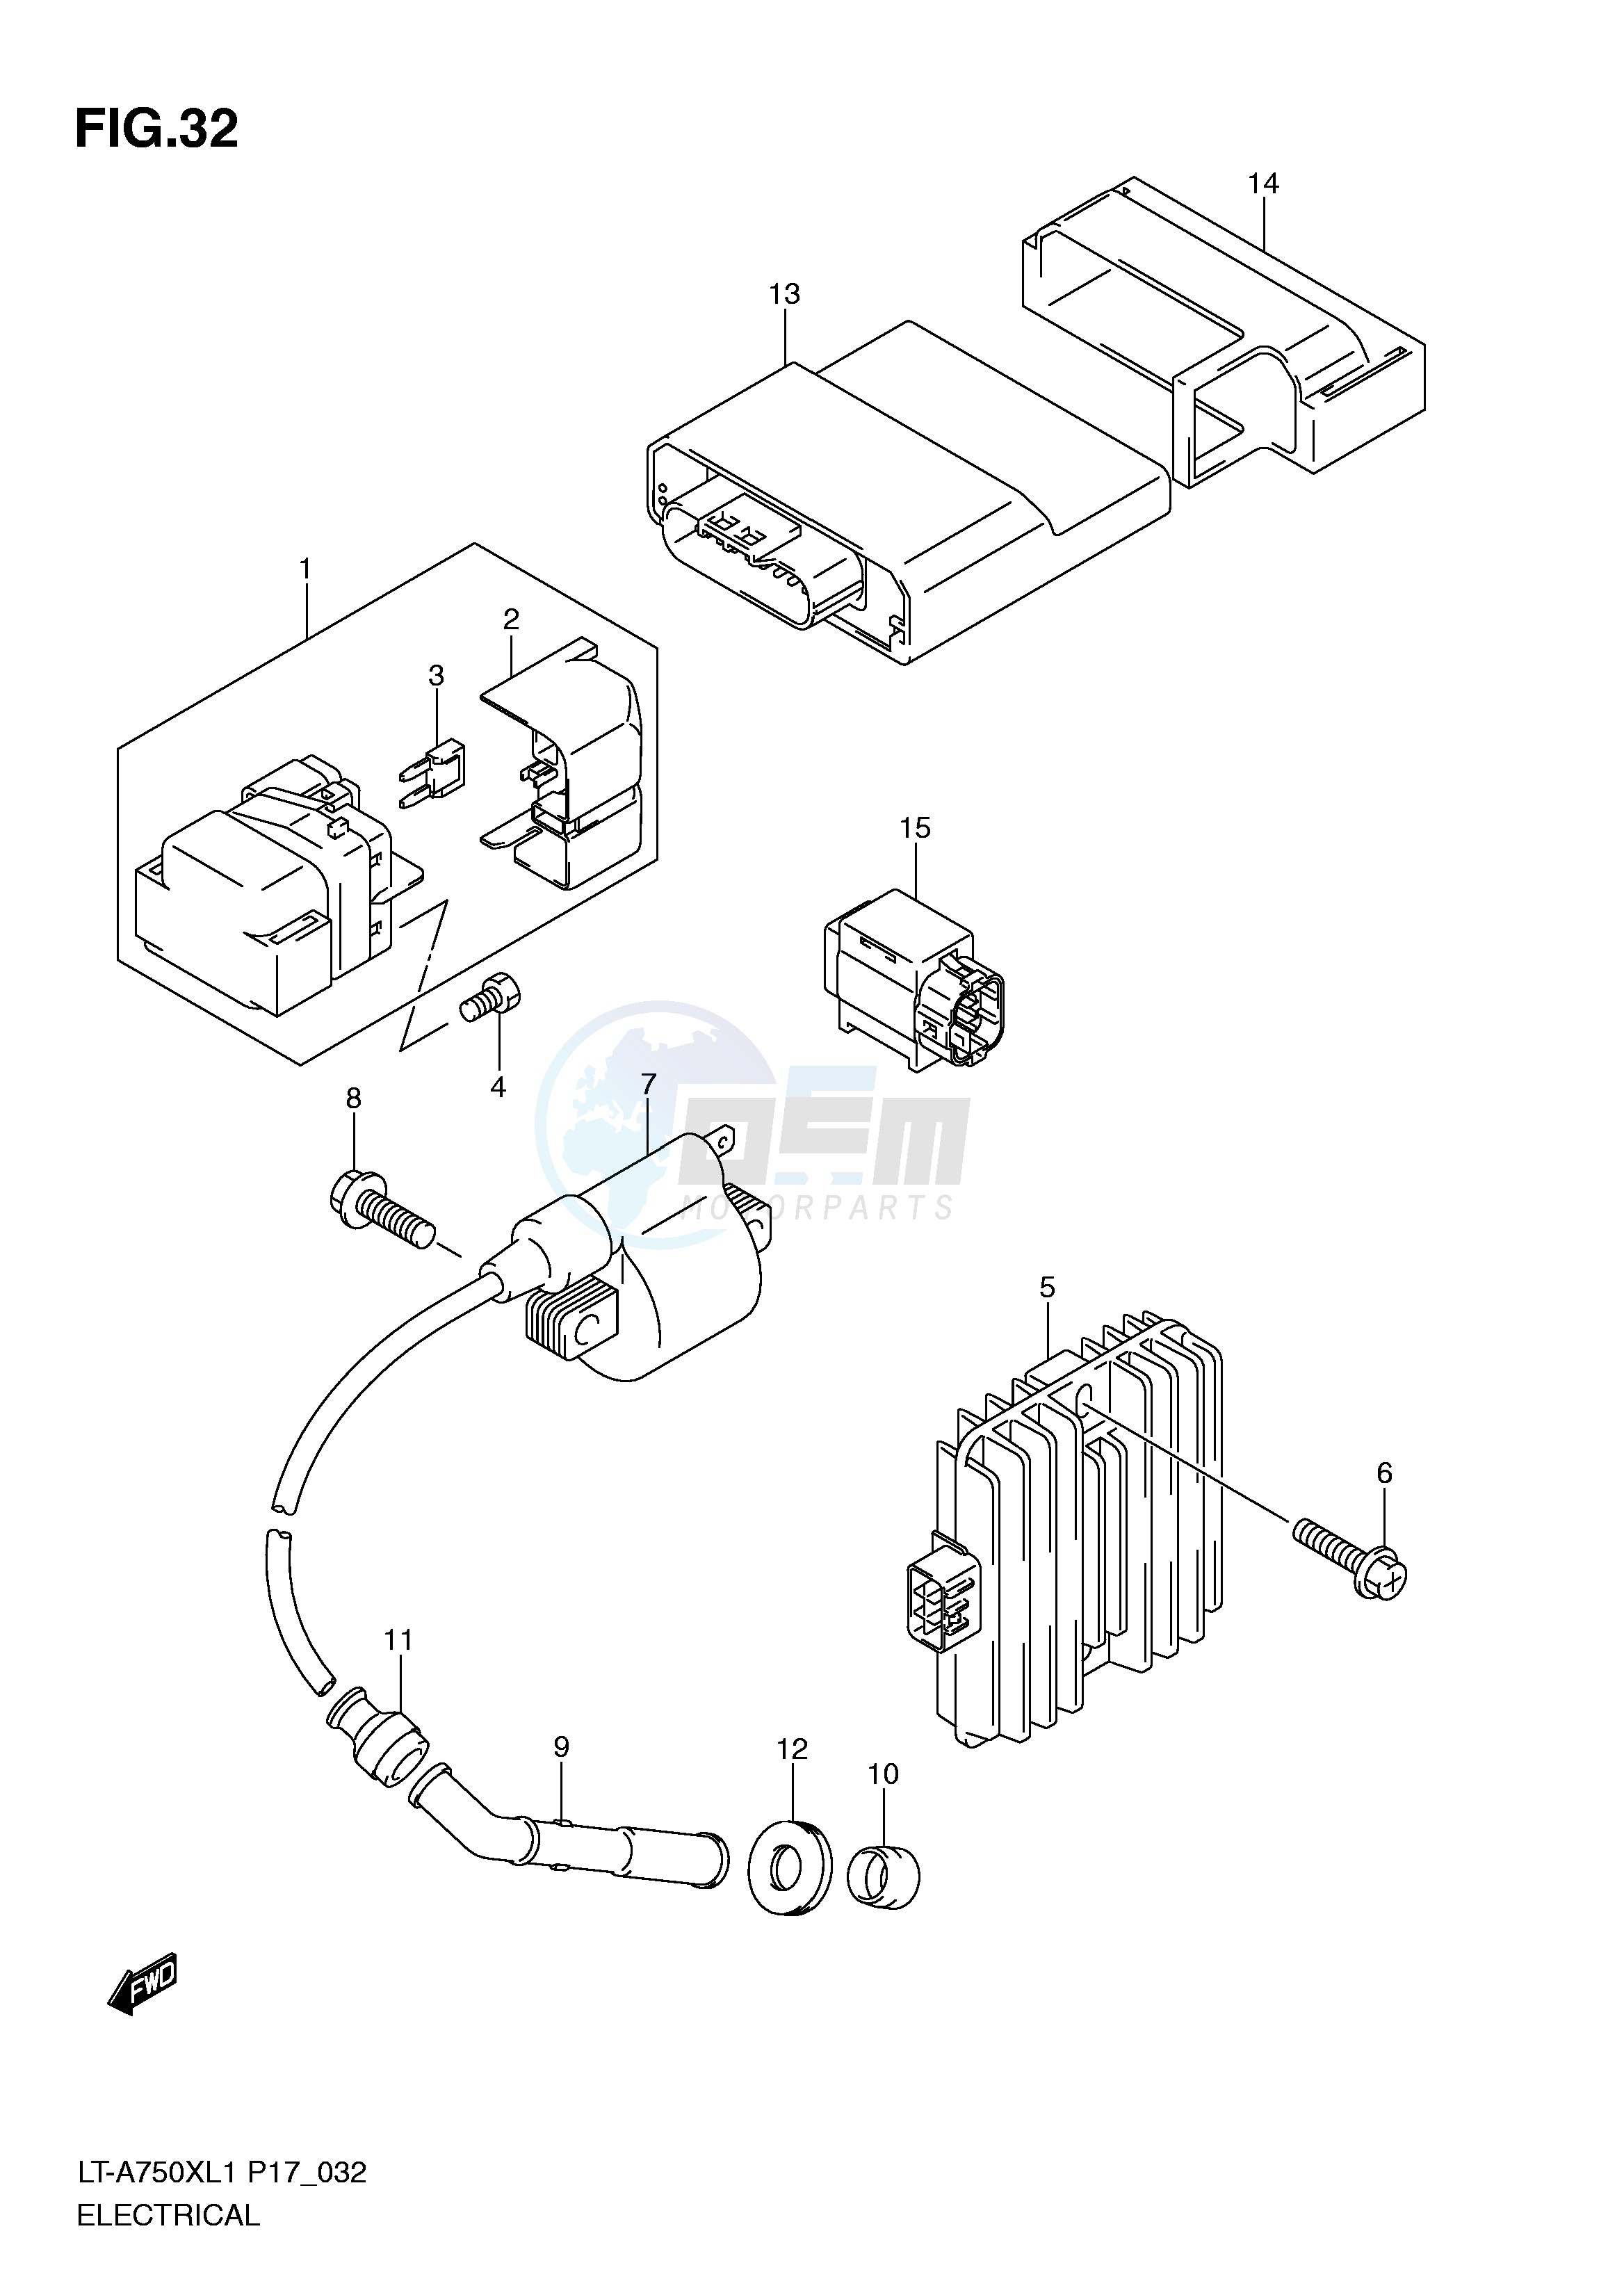 ELECTRICAL (LT-A750XL1 P24) blueprint